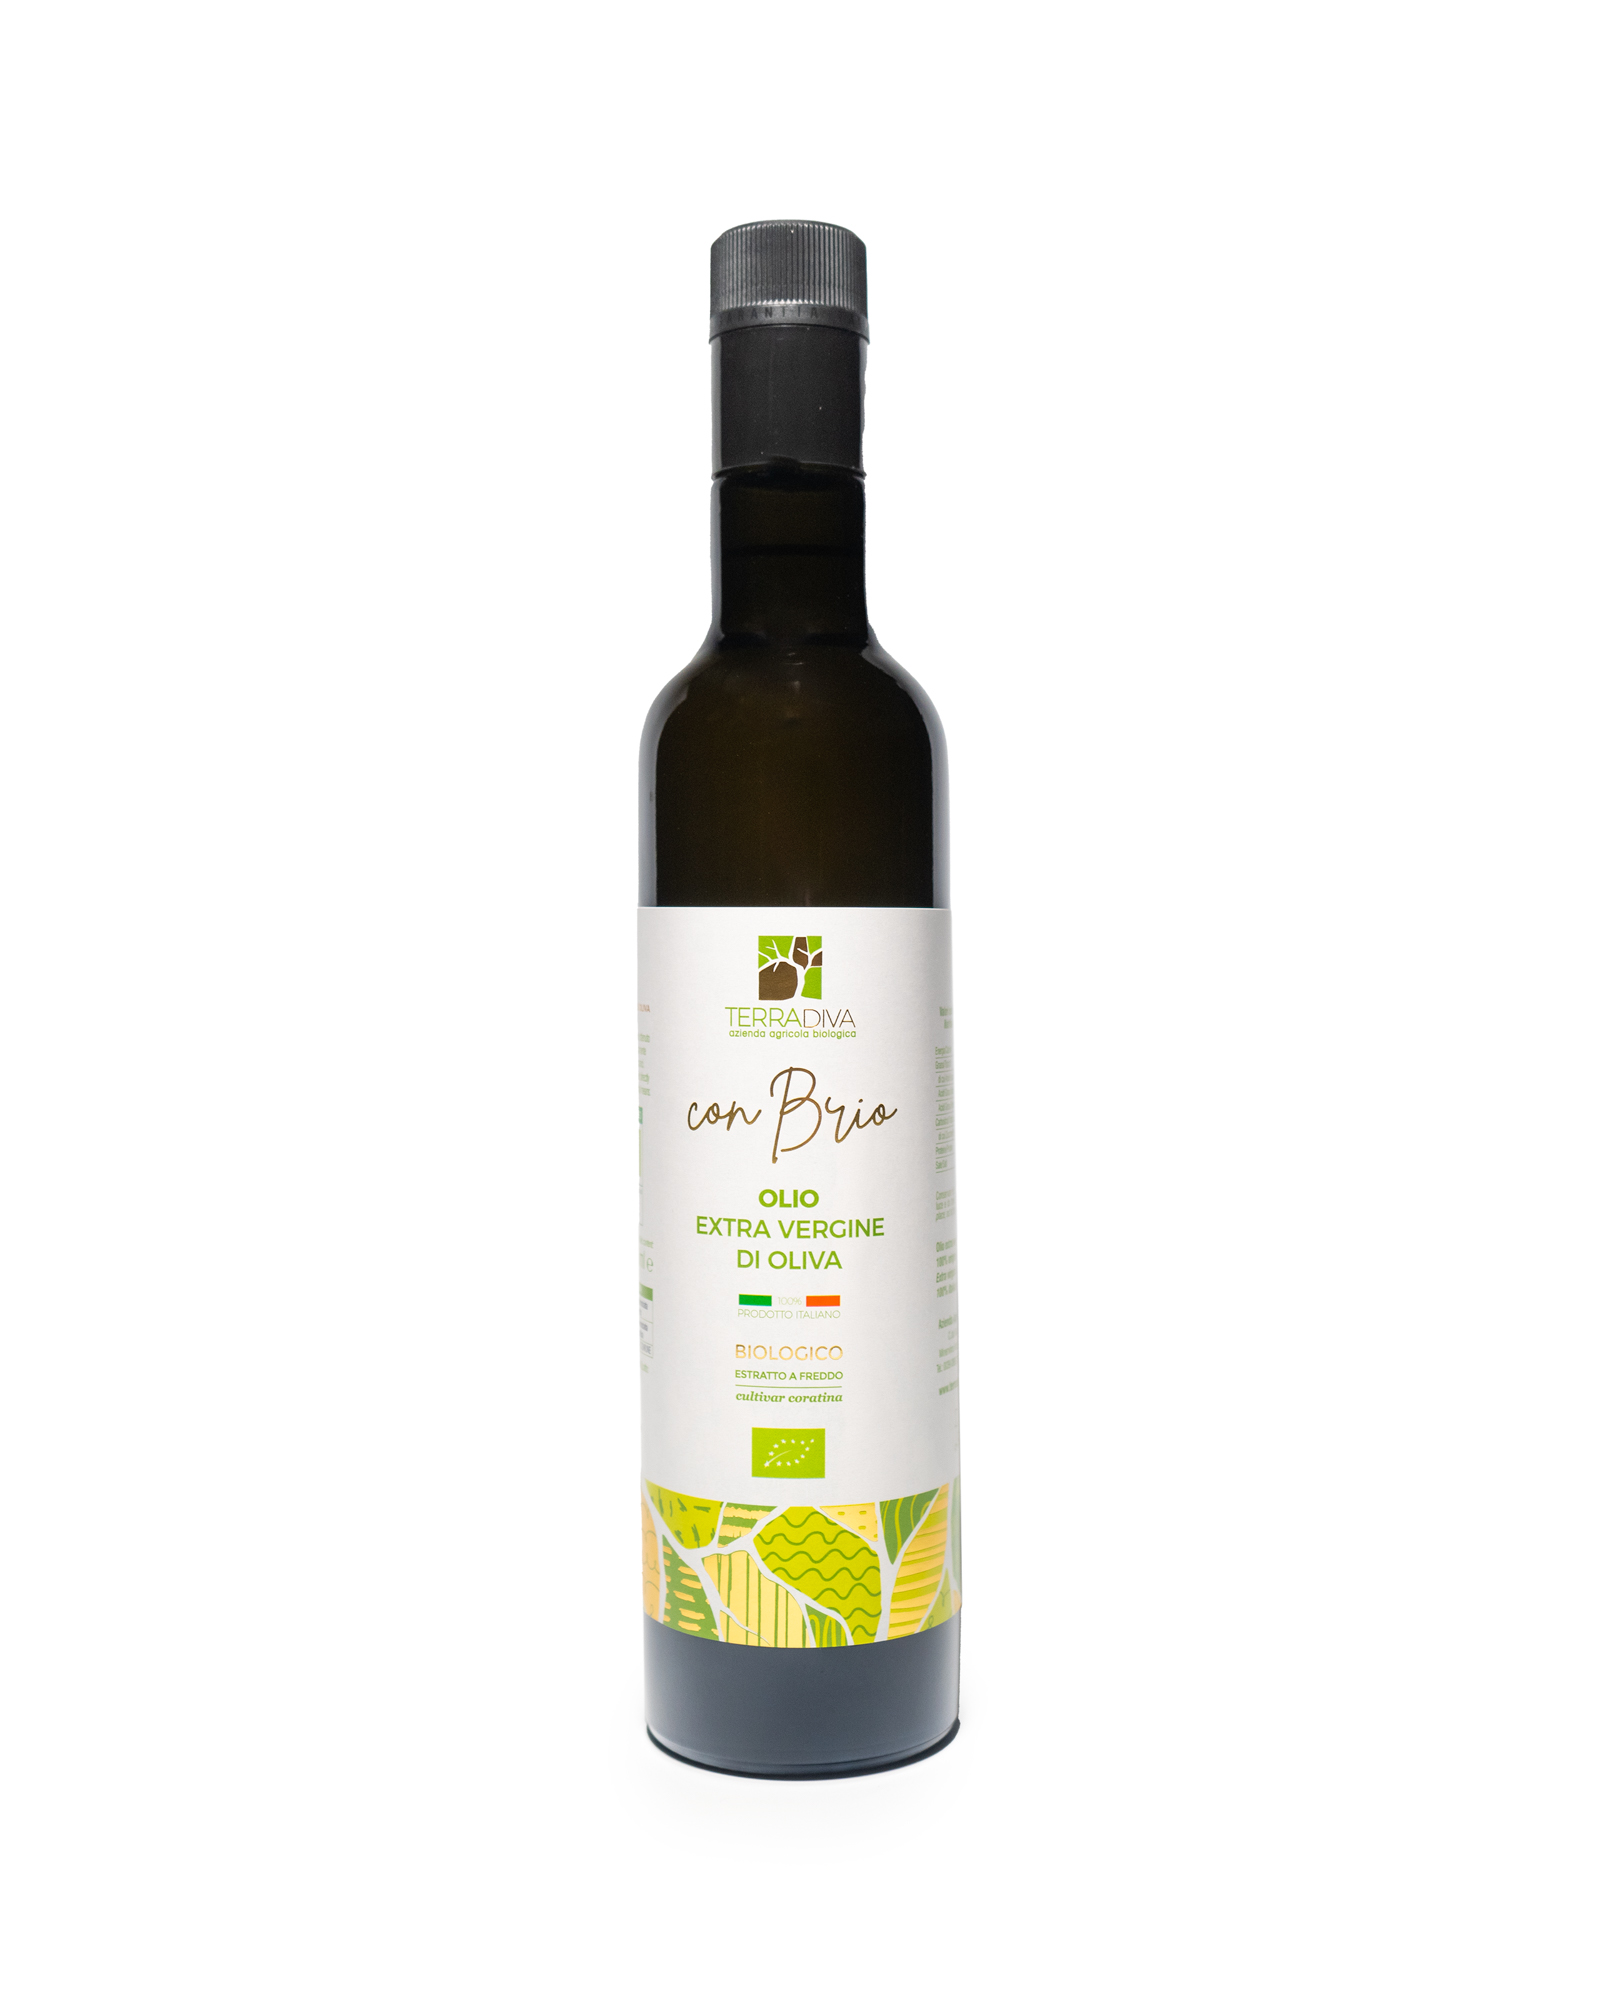 CON BRIO organic extra virgin olive oil, filtered, 500ml bottle.